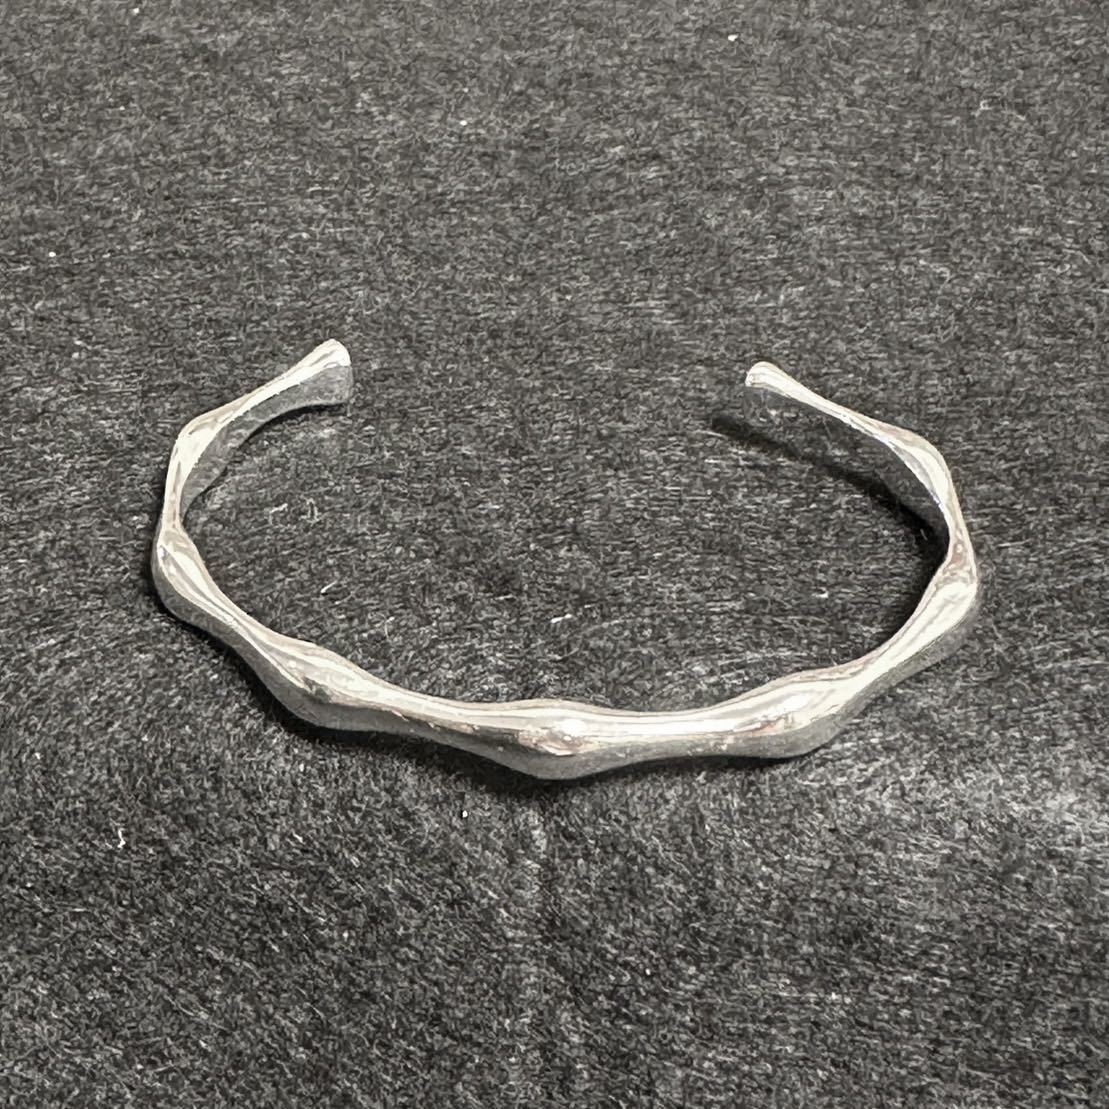  silver 925 bangle bamboo bracele lady's men's simple silver bangle silvermeki deer n jewelry 